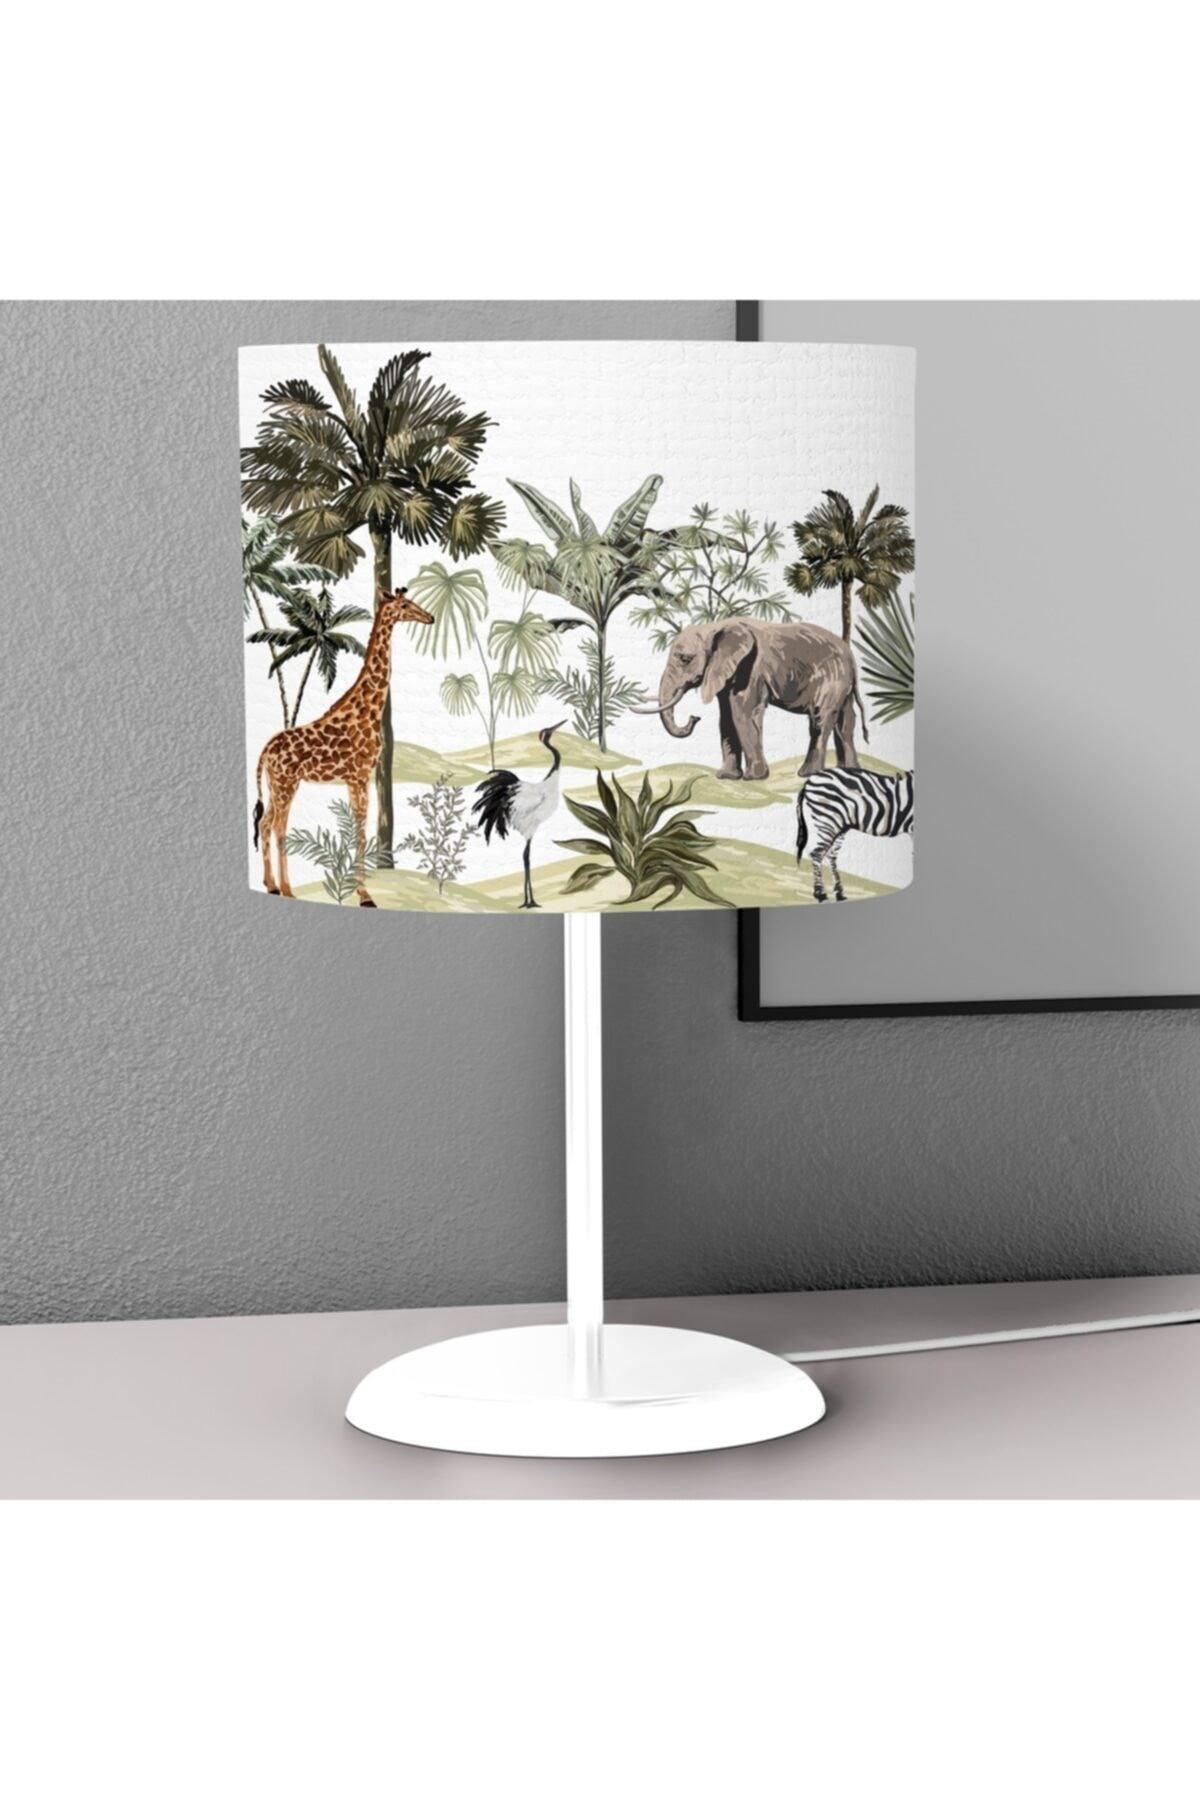 Zebra Elephant And Giraffe Patterned Kids Room Digital Printed Kids Room Desktop Lampshade Chandelier - Swordslife